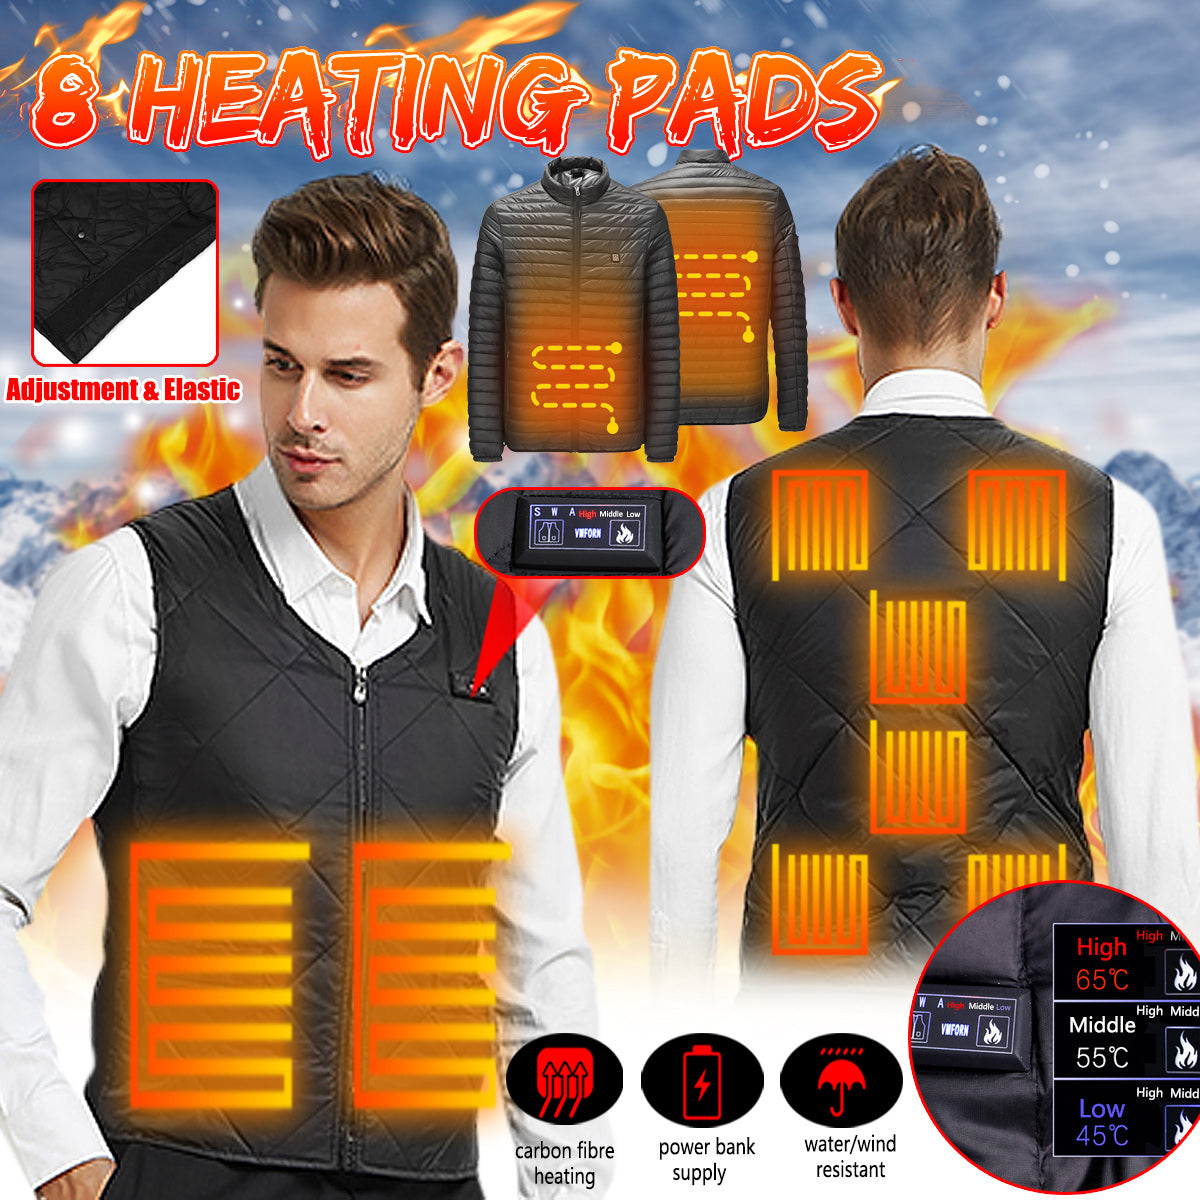 Dark Orange Dual ButtonElectric USB Down Vest Jacket Heated Jacket Adjust 8 heating Pads Hotplates Washable Winter Warm 3 Adjustment Temp